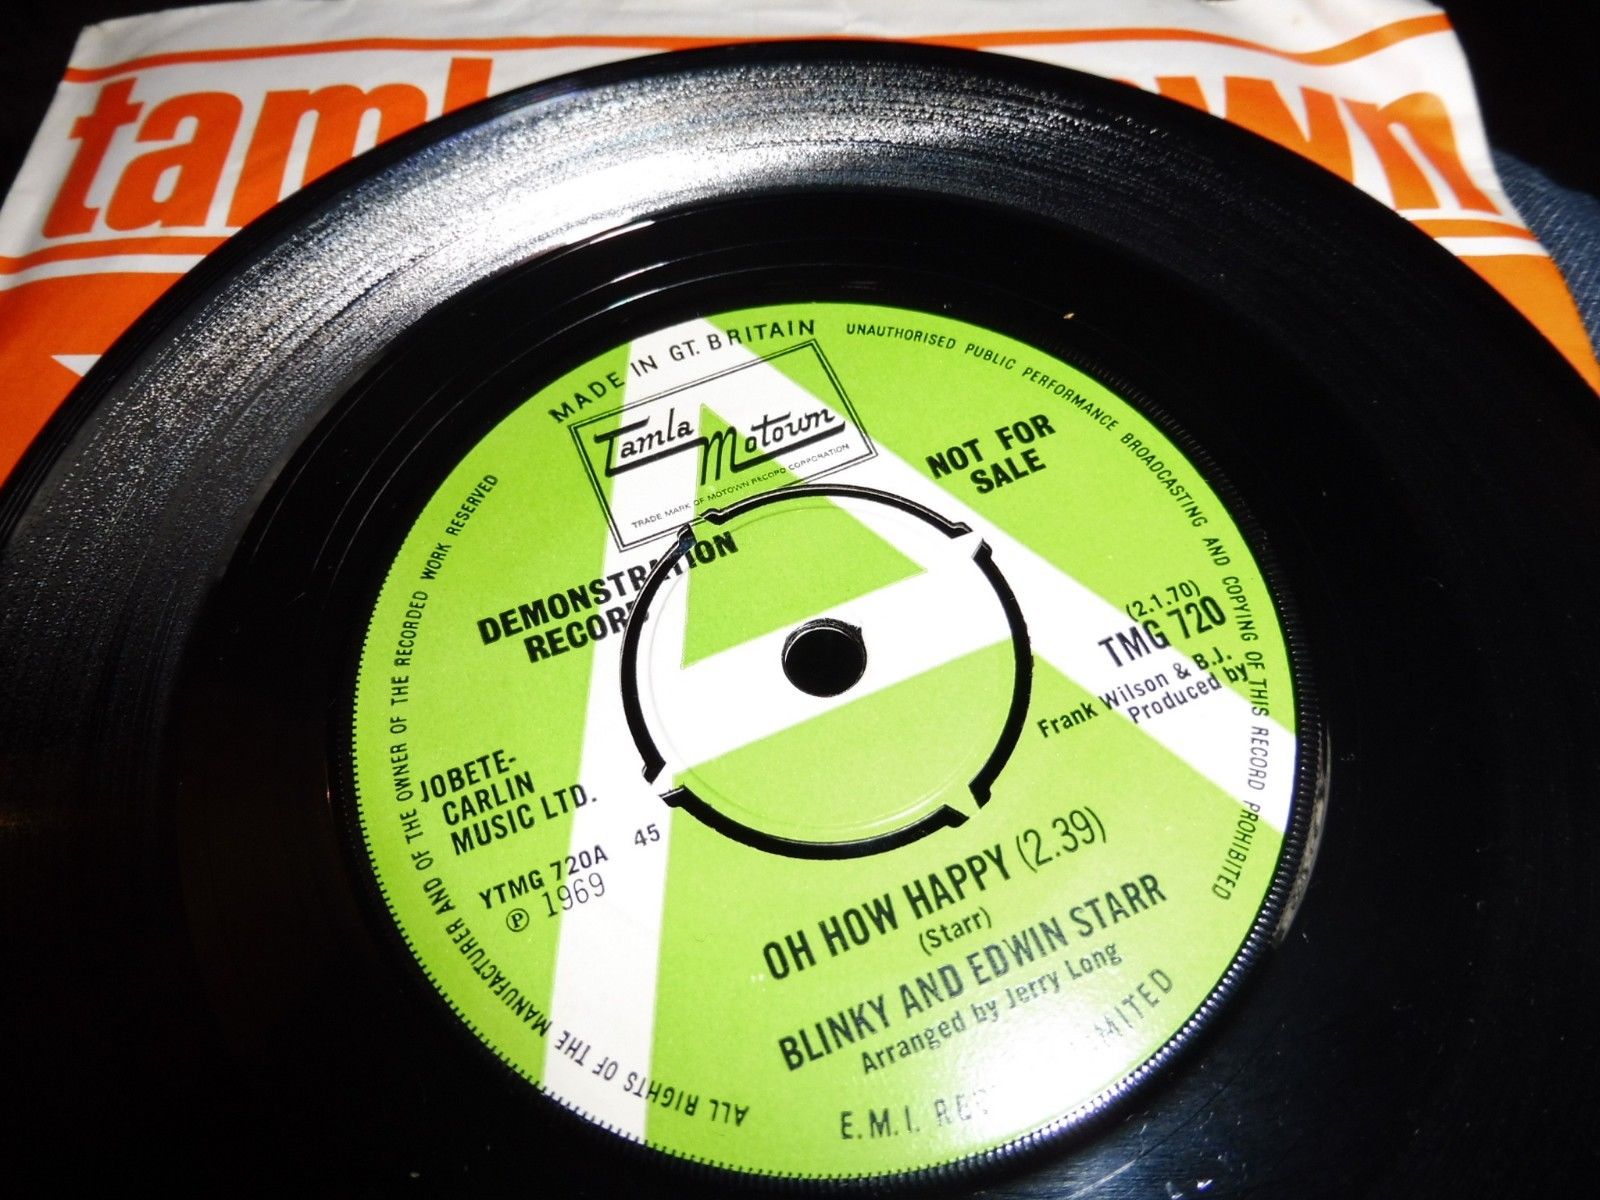 Tamla Motown Demo TMG 720. Blinky And Edwin Starr - Oh How Happy / Ooo Baby Baby